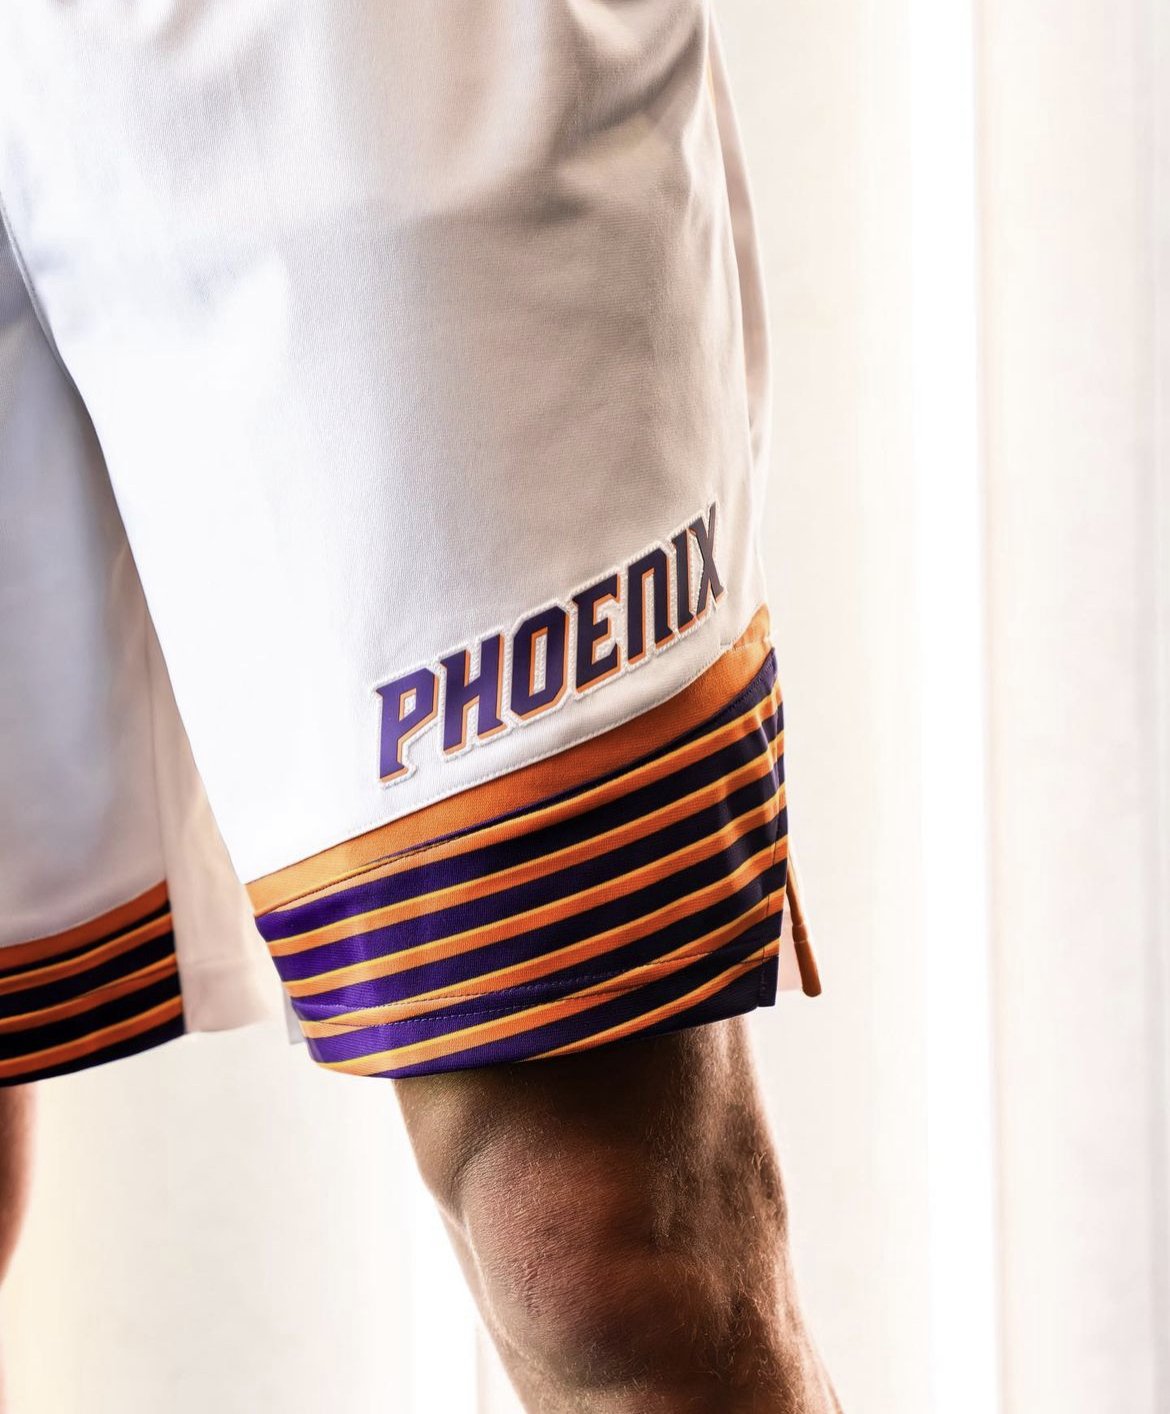 Phoenix Suns New Statement Edition Uniform — UNISWAG